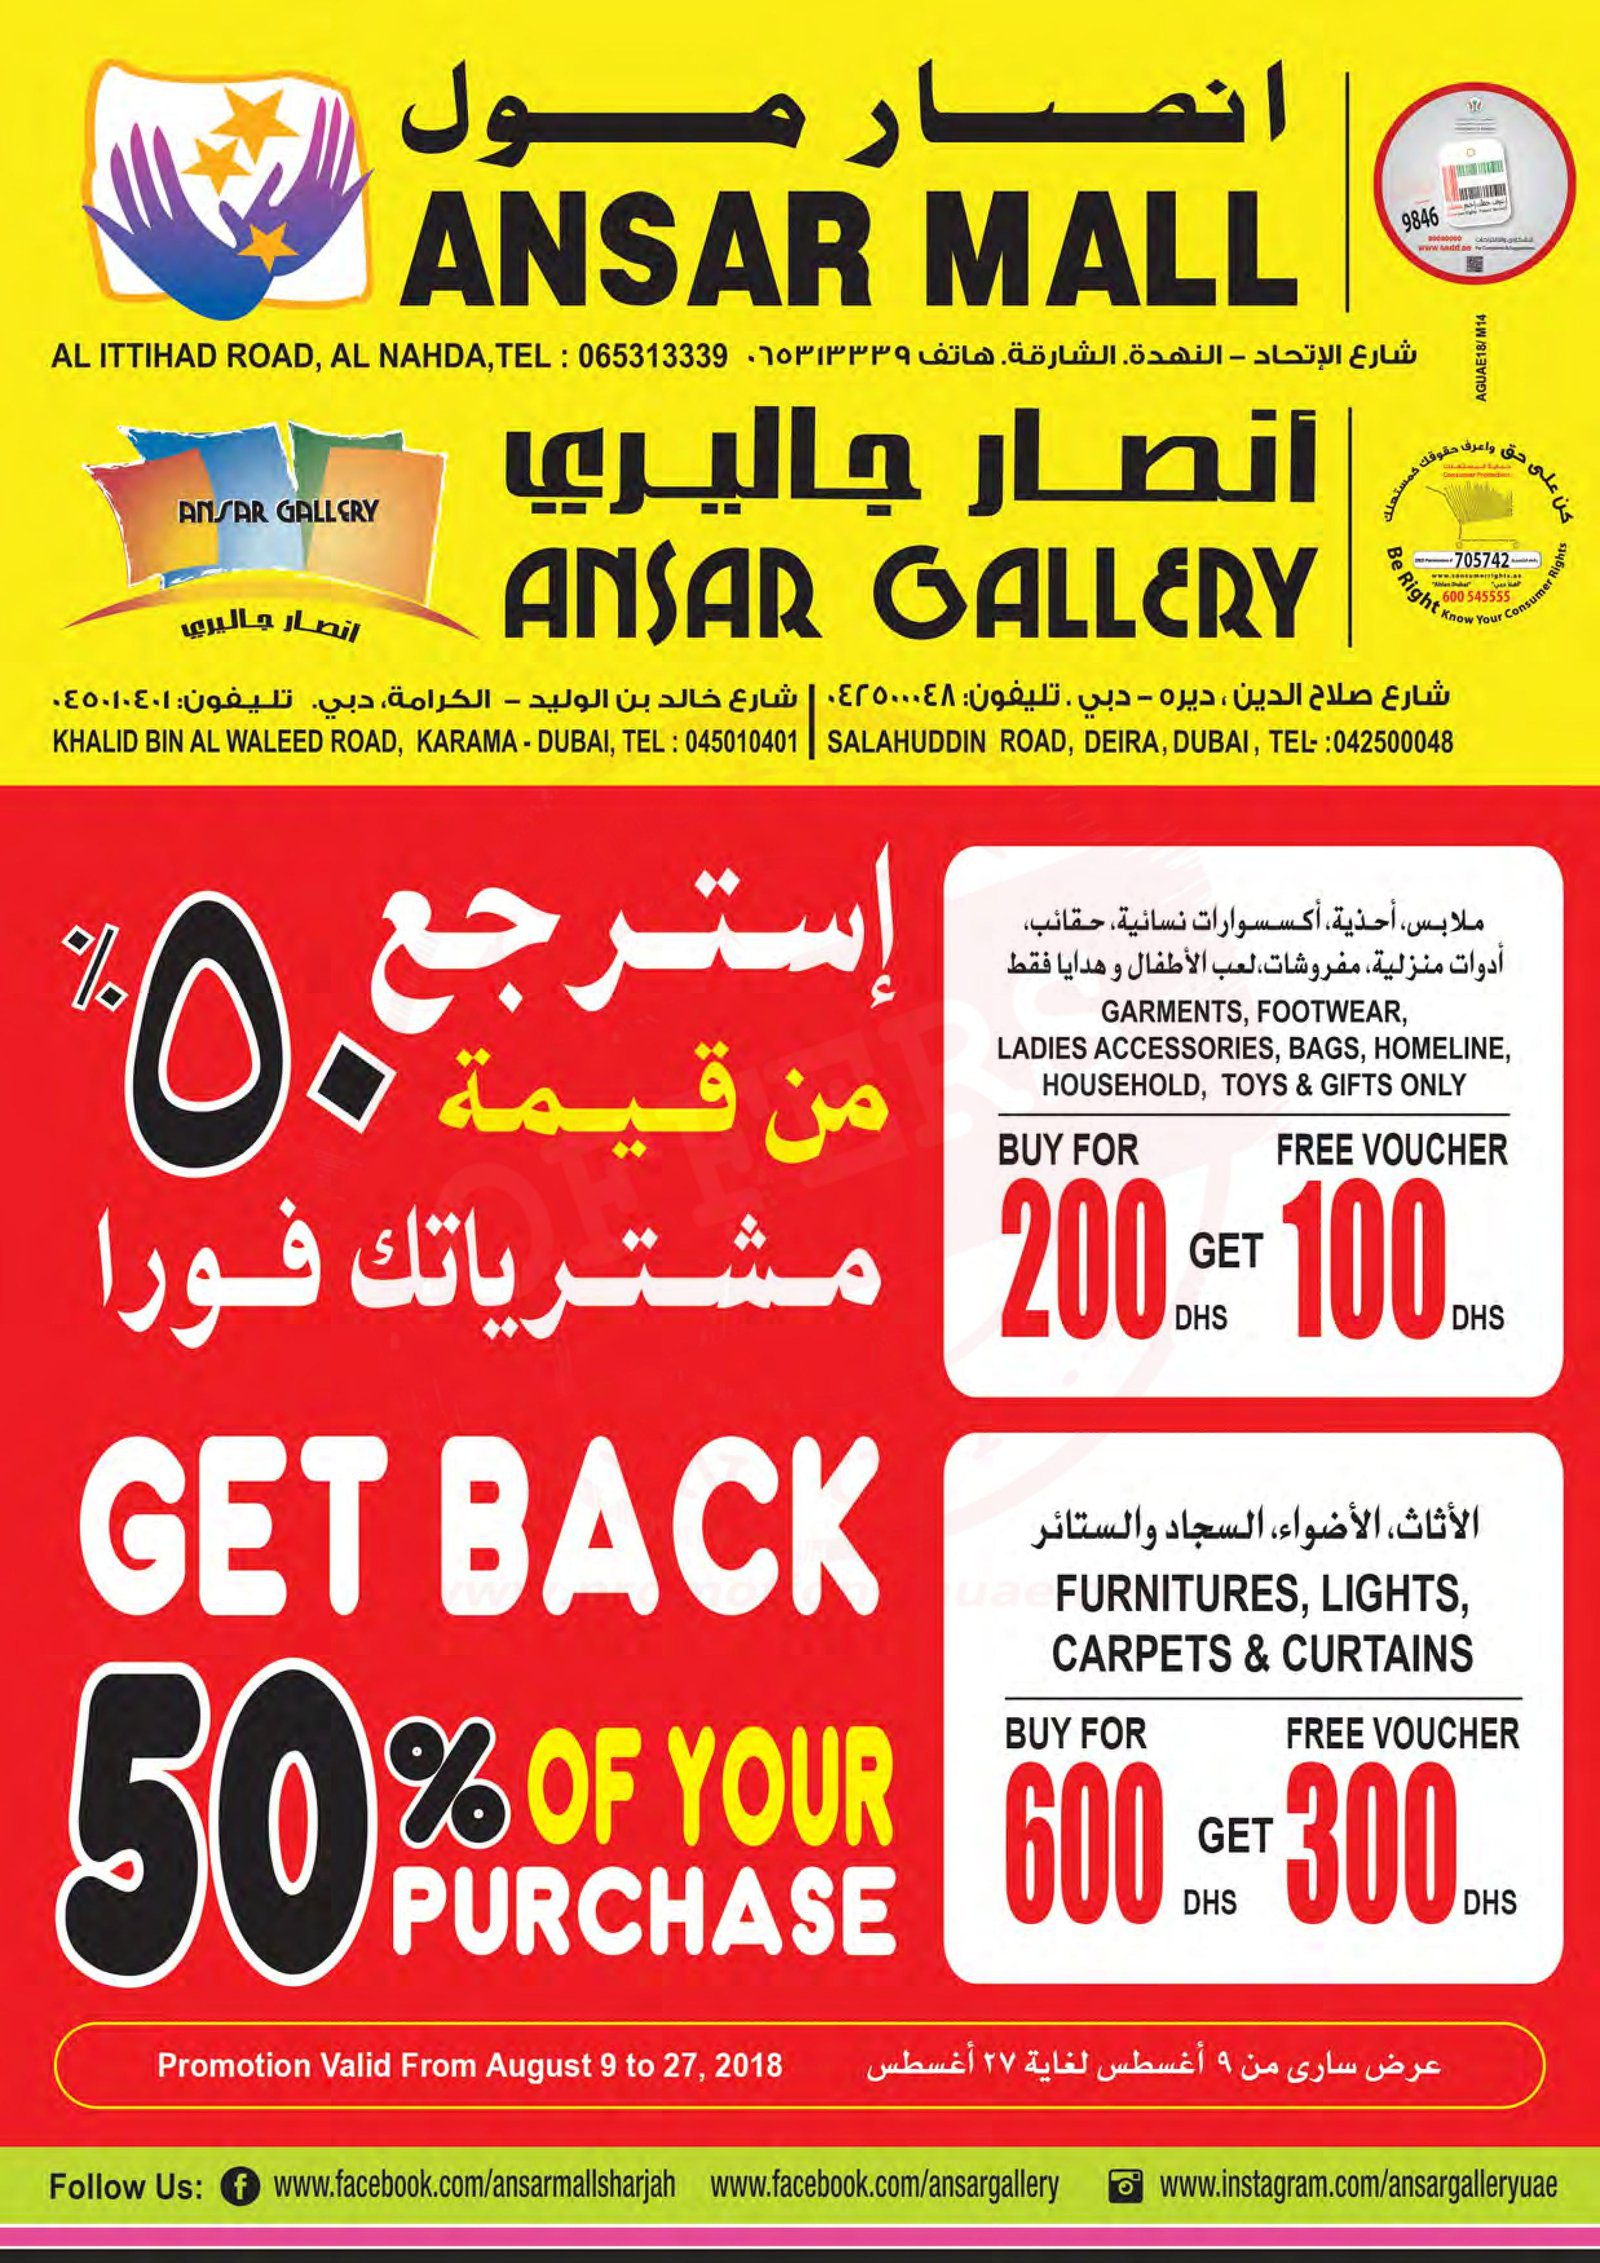 Ansar Mall Ansar Gallery GET BACK 50% OFFER